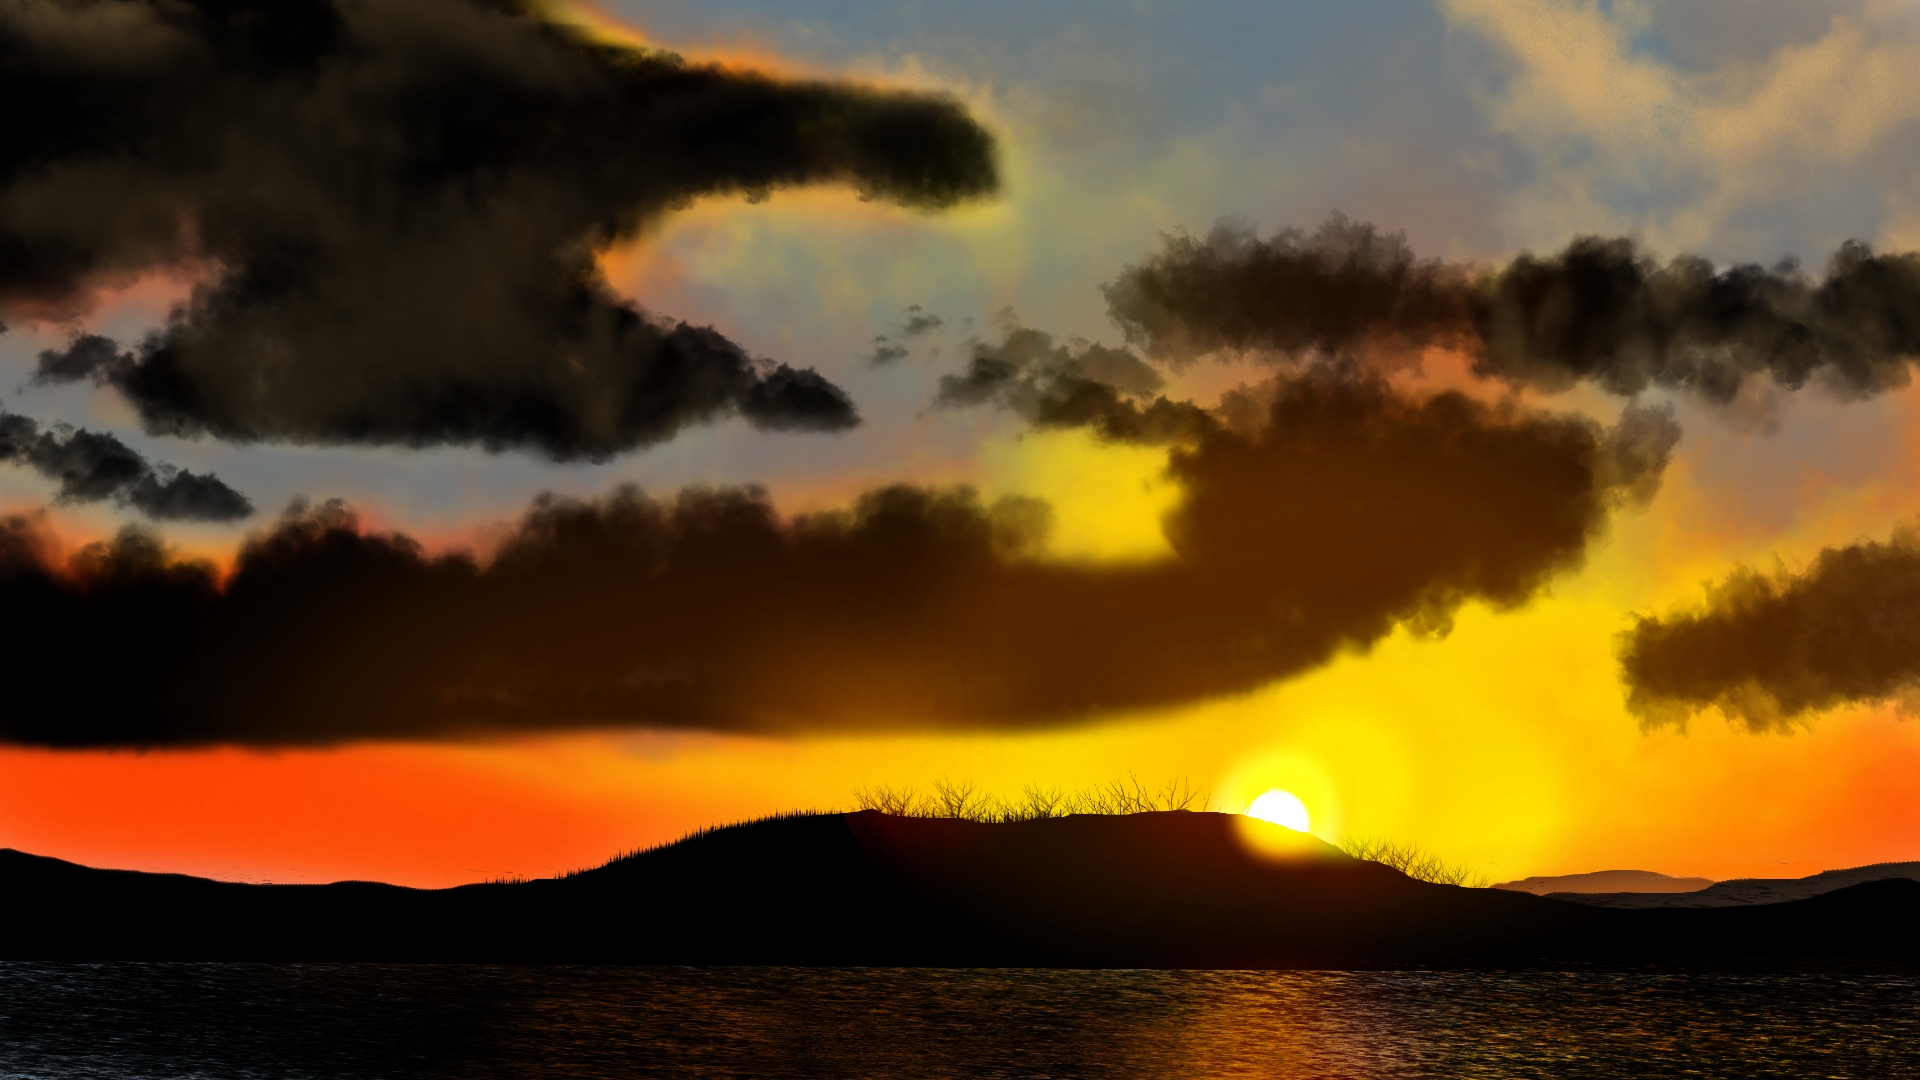 Digital Painting Digital Art Nature Landscape Sunset Colorful Clouds Sky Water 1920x1080